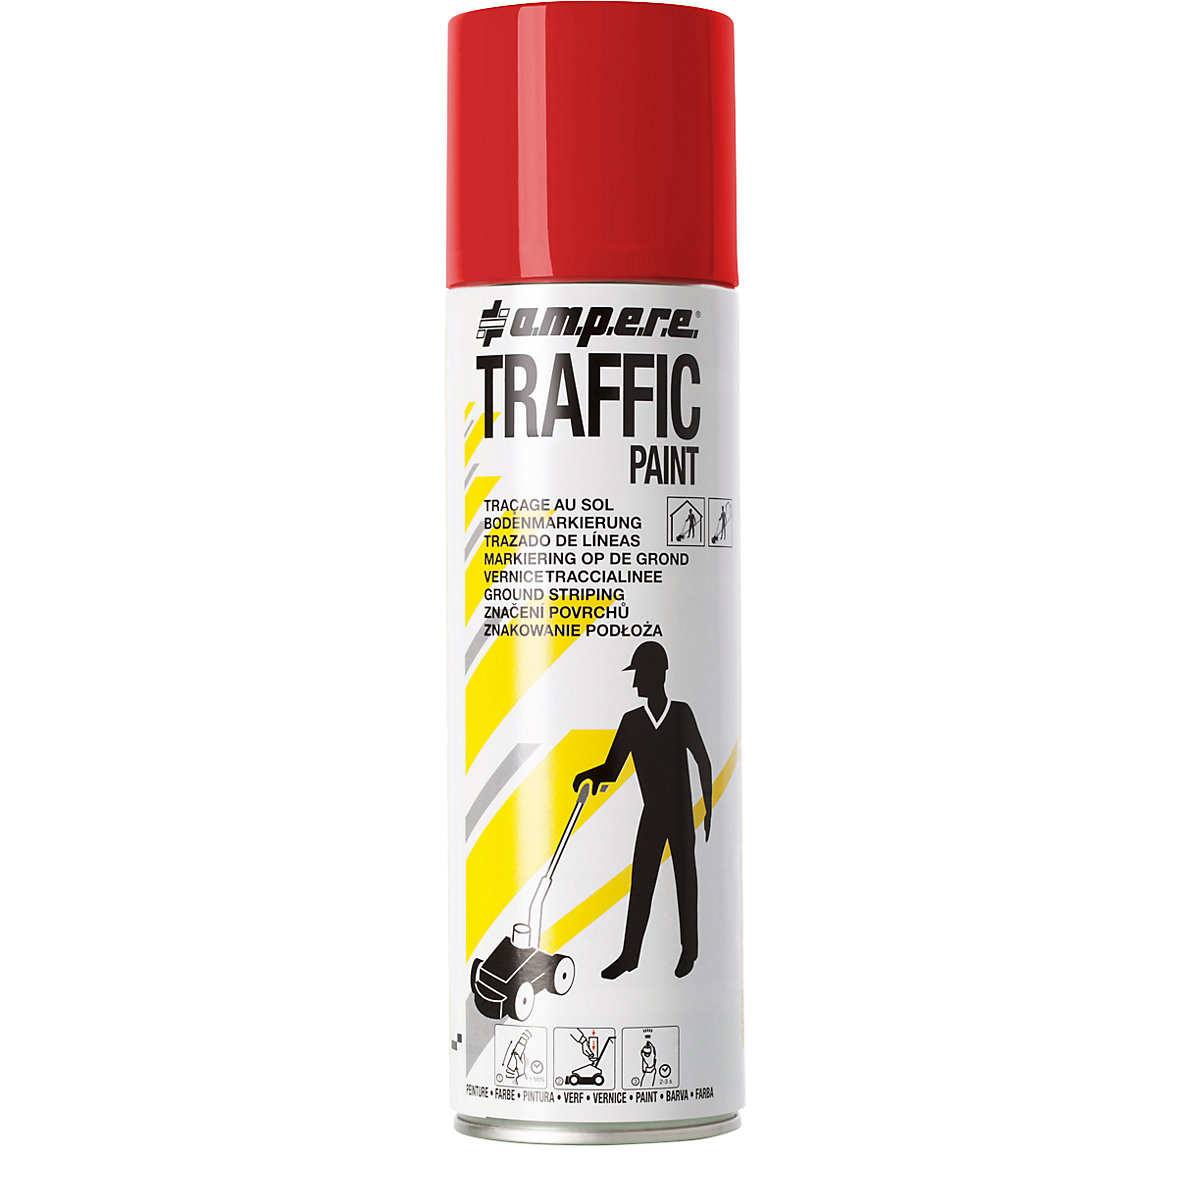 Tinta de marcação Traffic Paint® – Ampere, volume 500 ml, embalagem 12 latas, vermelho-5